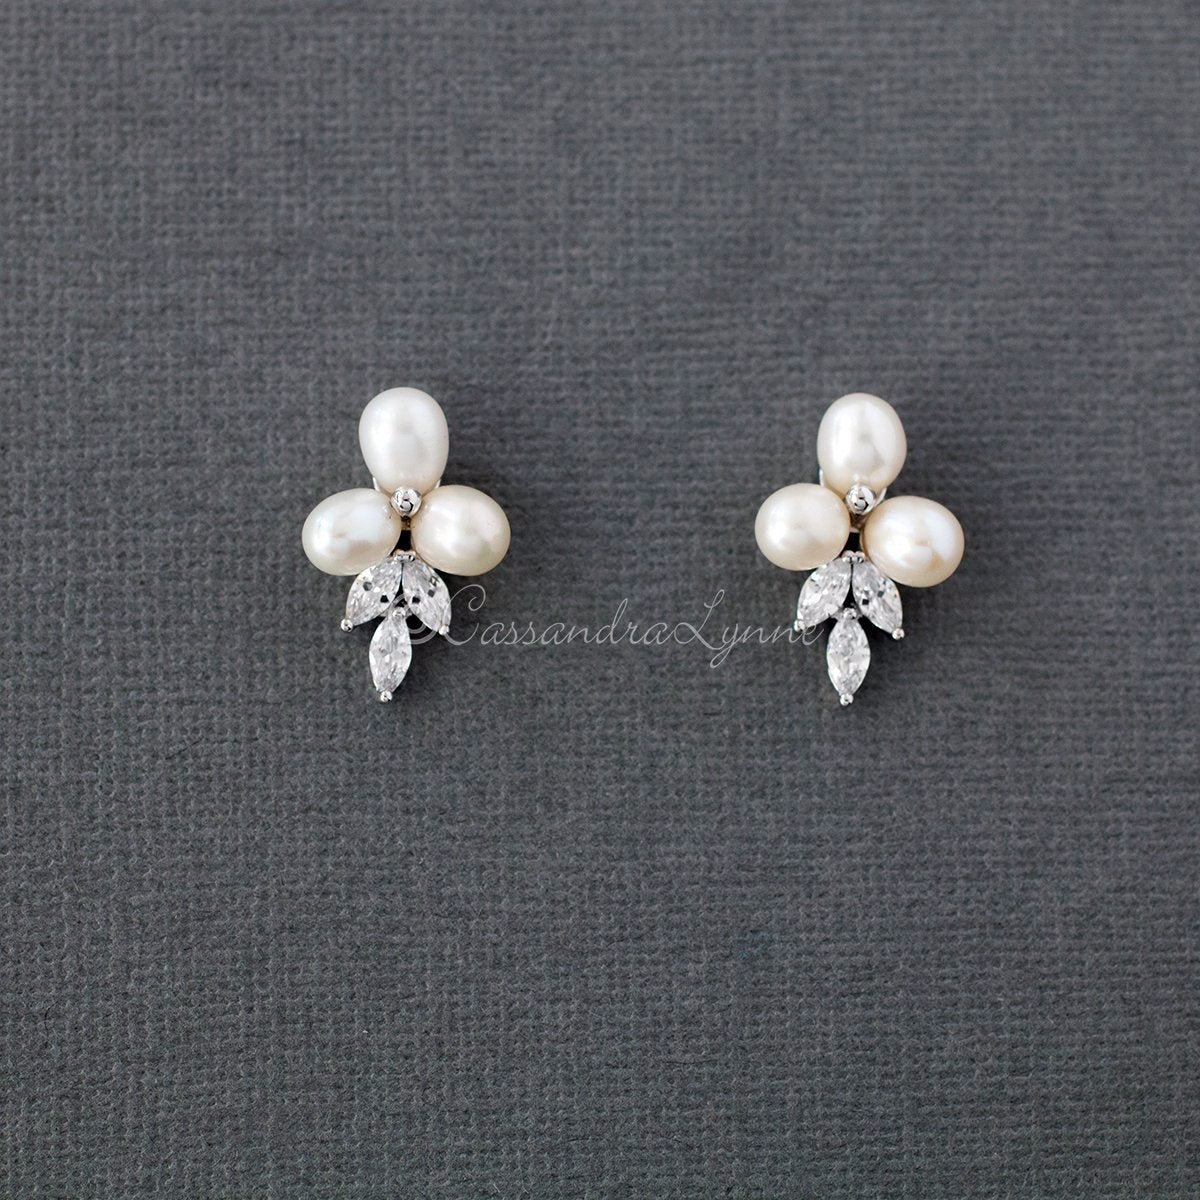 Pearl Flower Stud Earrings for the Bride